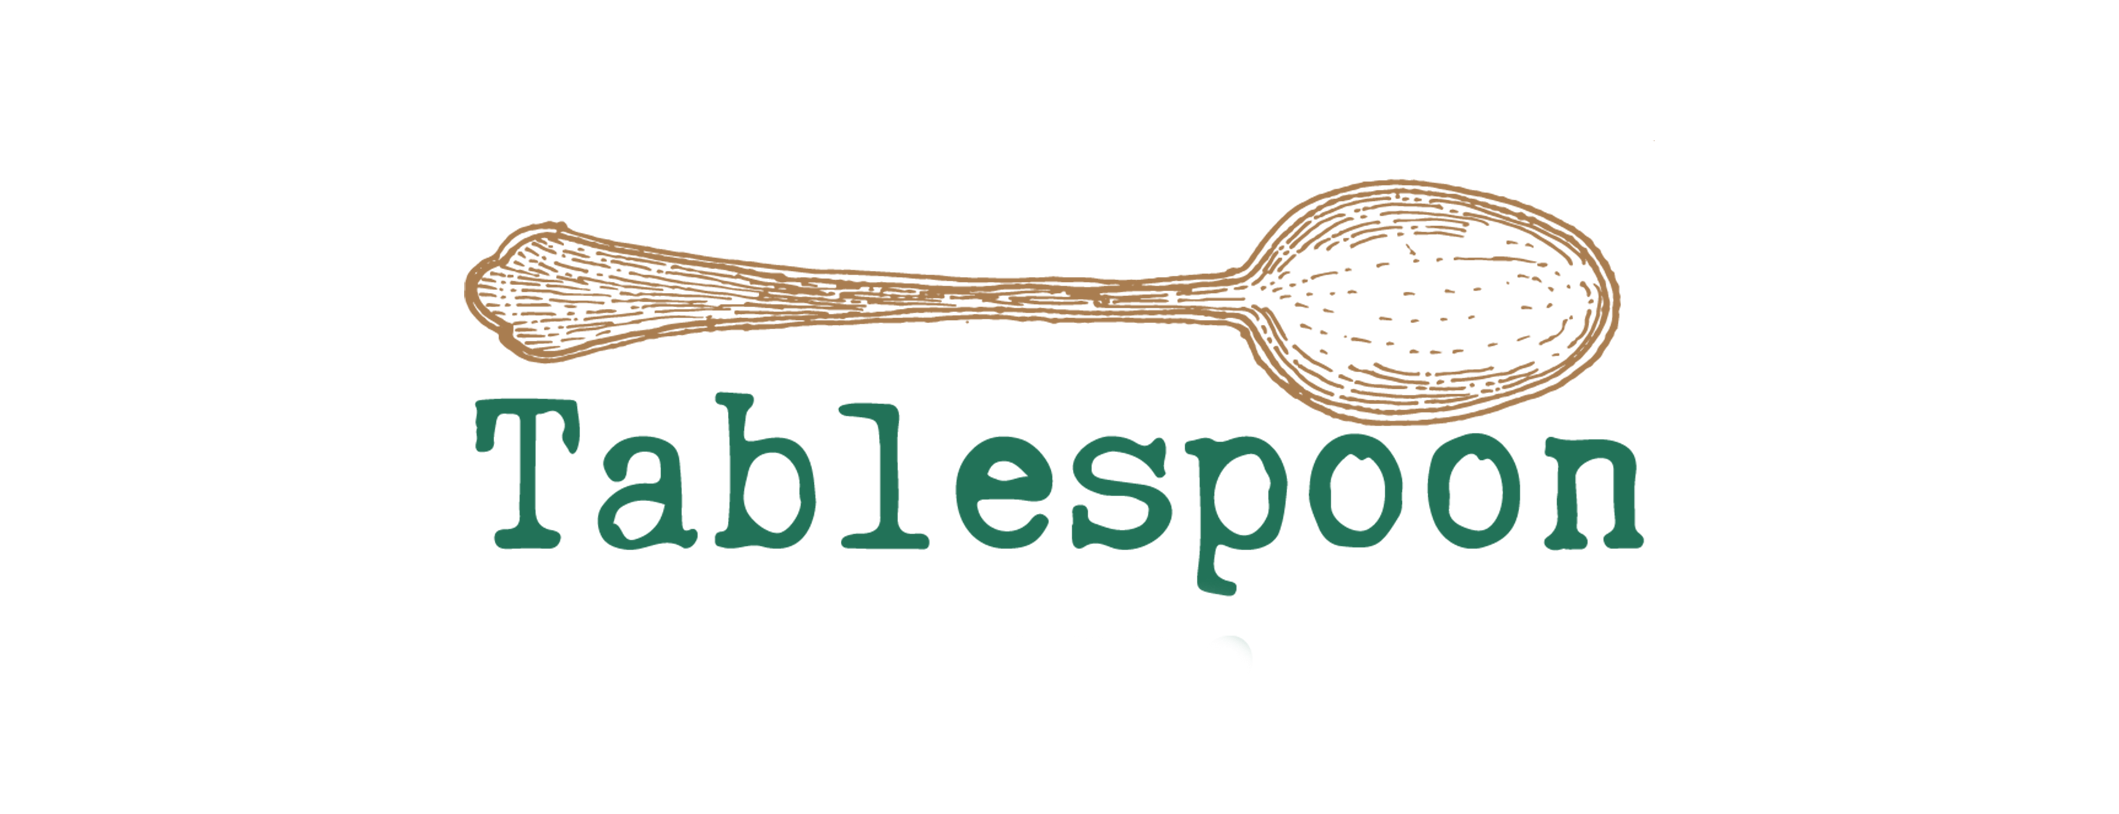 Tablespoon Ubud footer